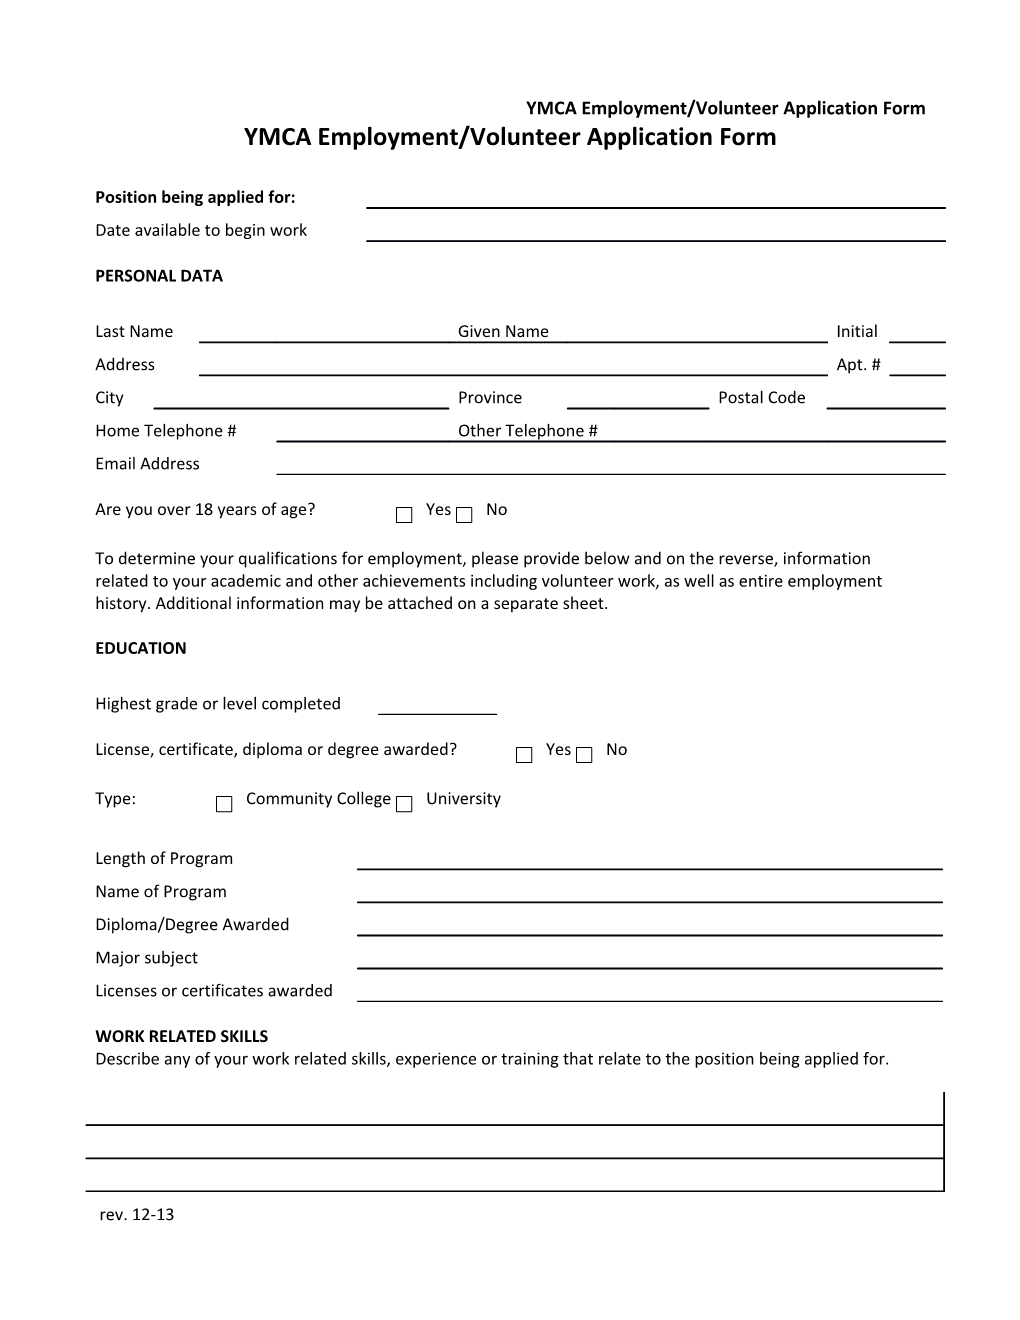 YMCA Employment/Volunteer Application Form